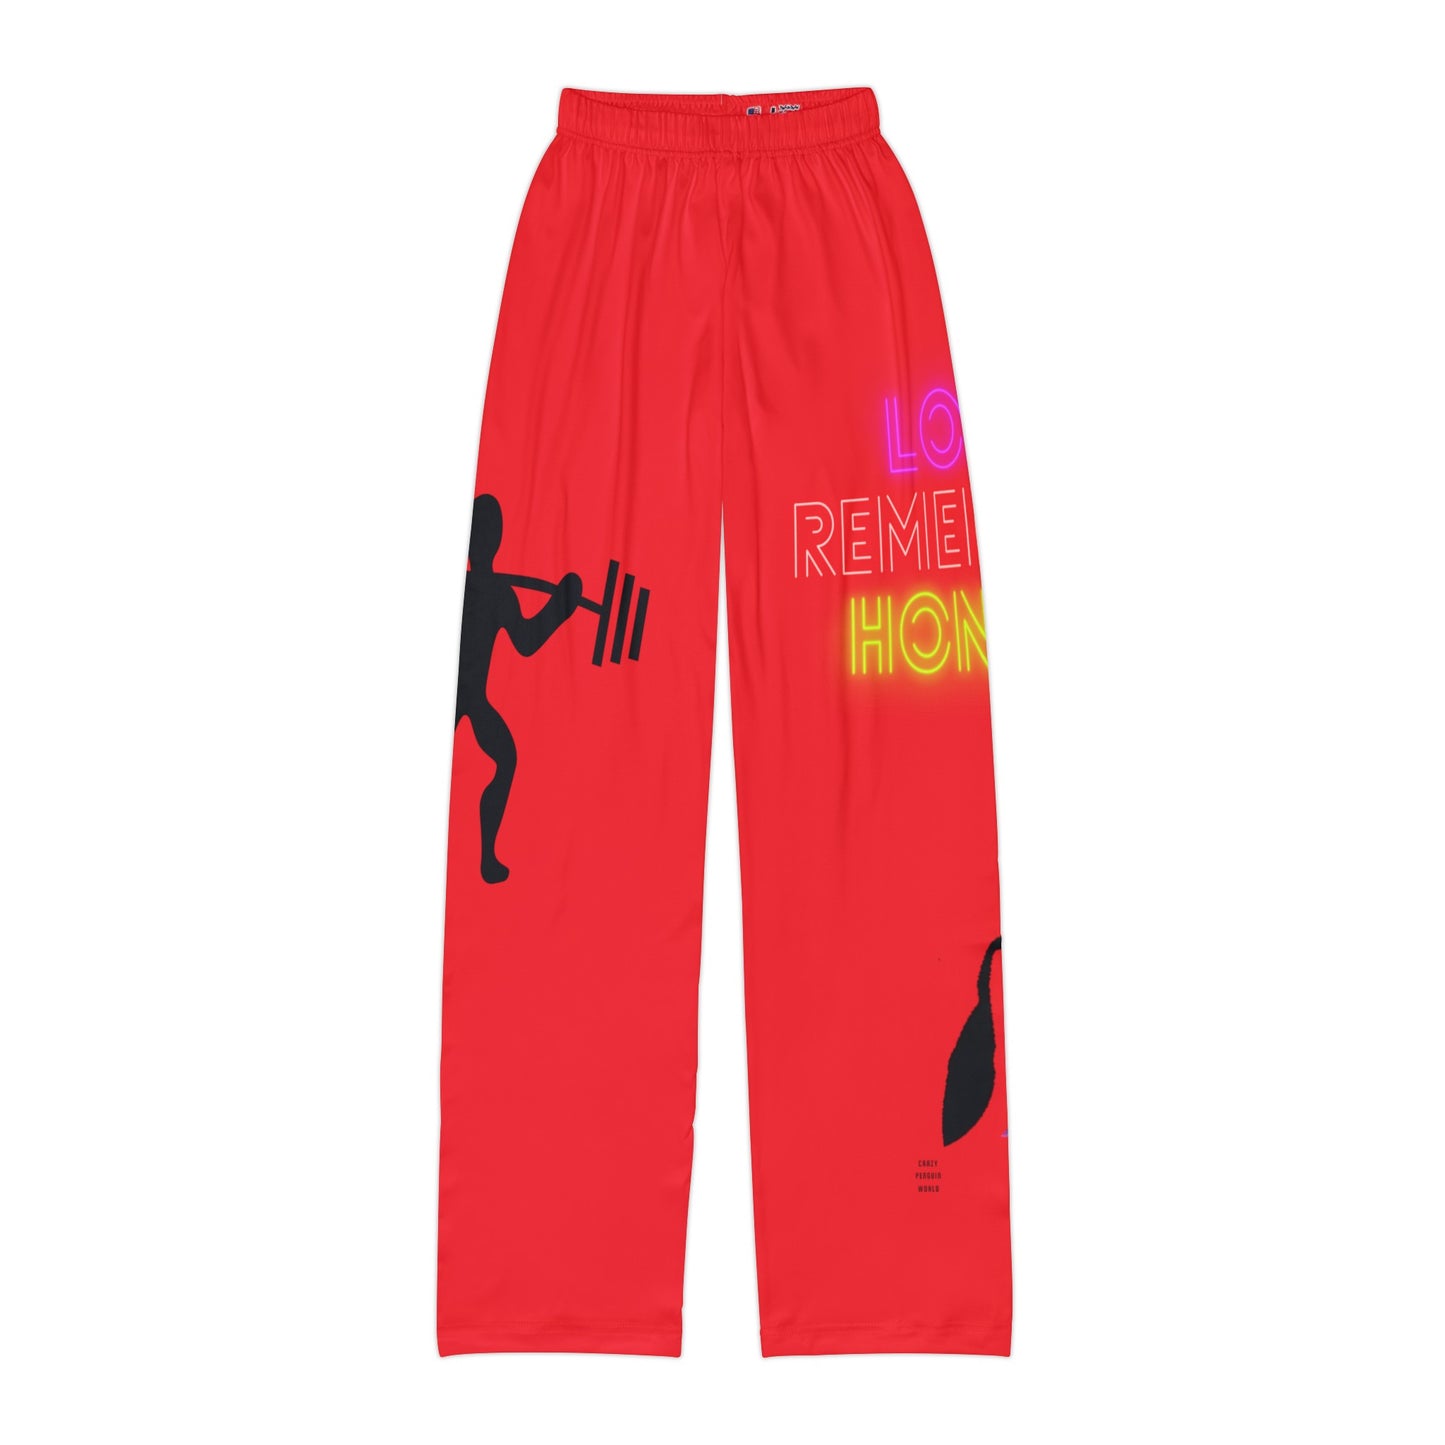 Kids Pajama Pants: Weightlifting Red